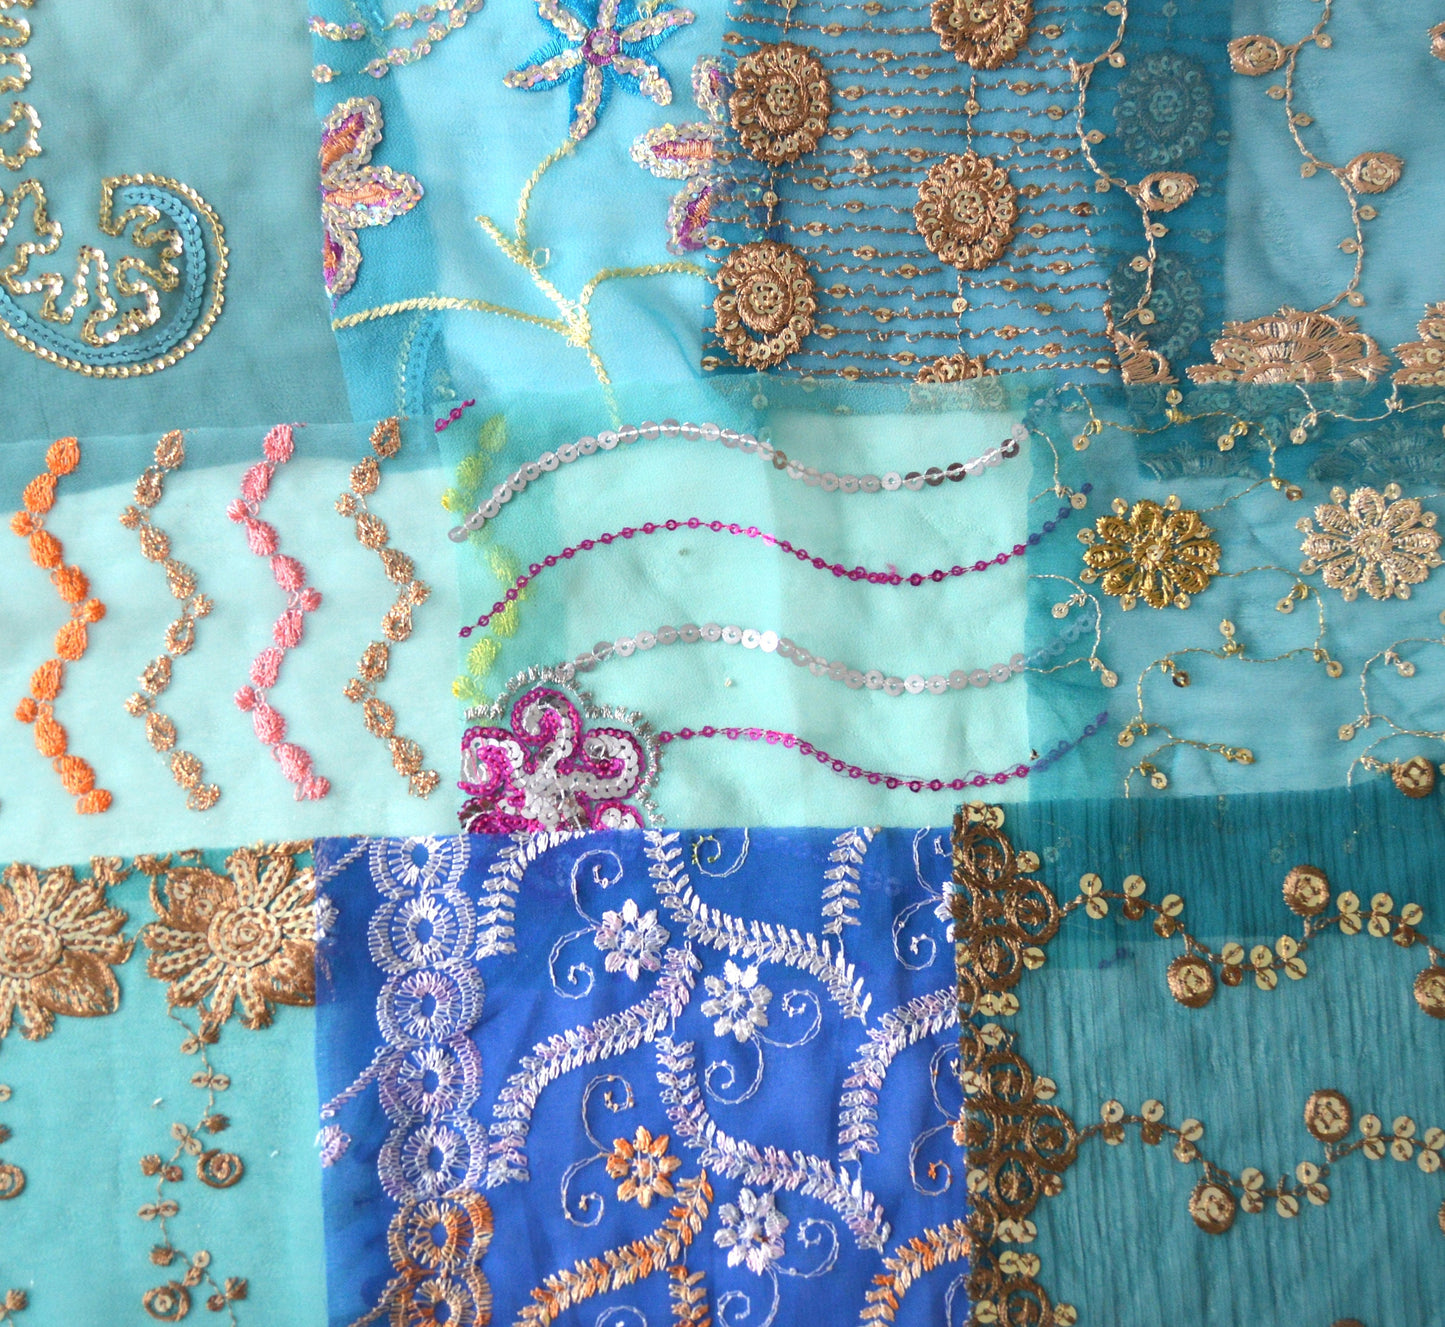 Teal Blue Assorted Embellished Sari Fabric Remnants Scraps - 10 Pieces